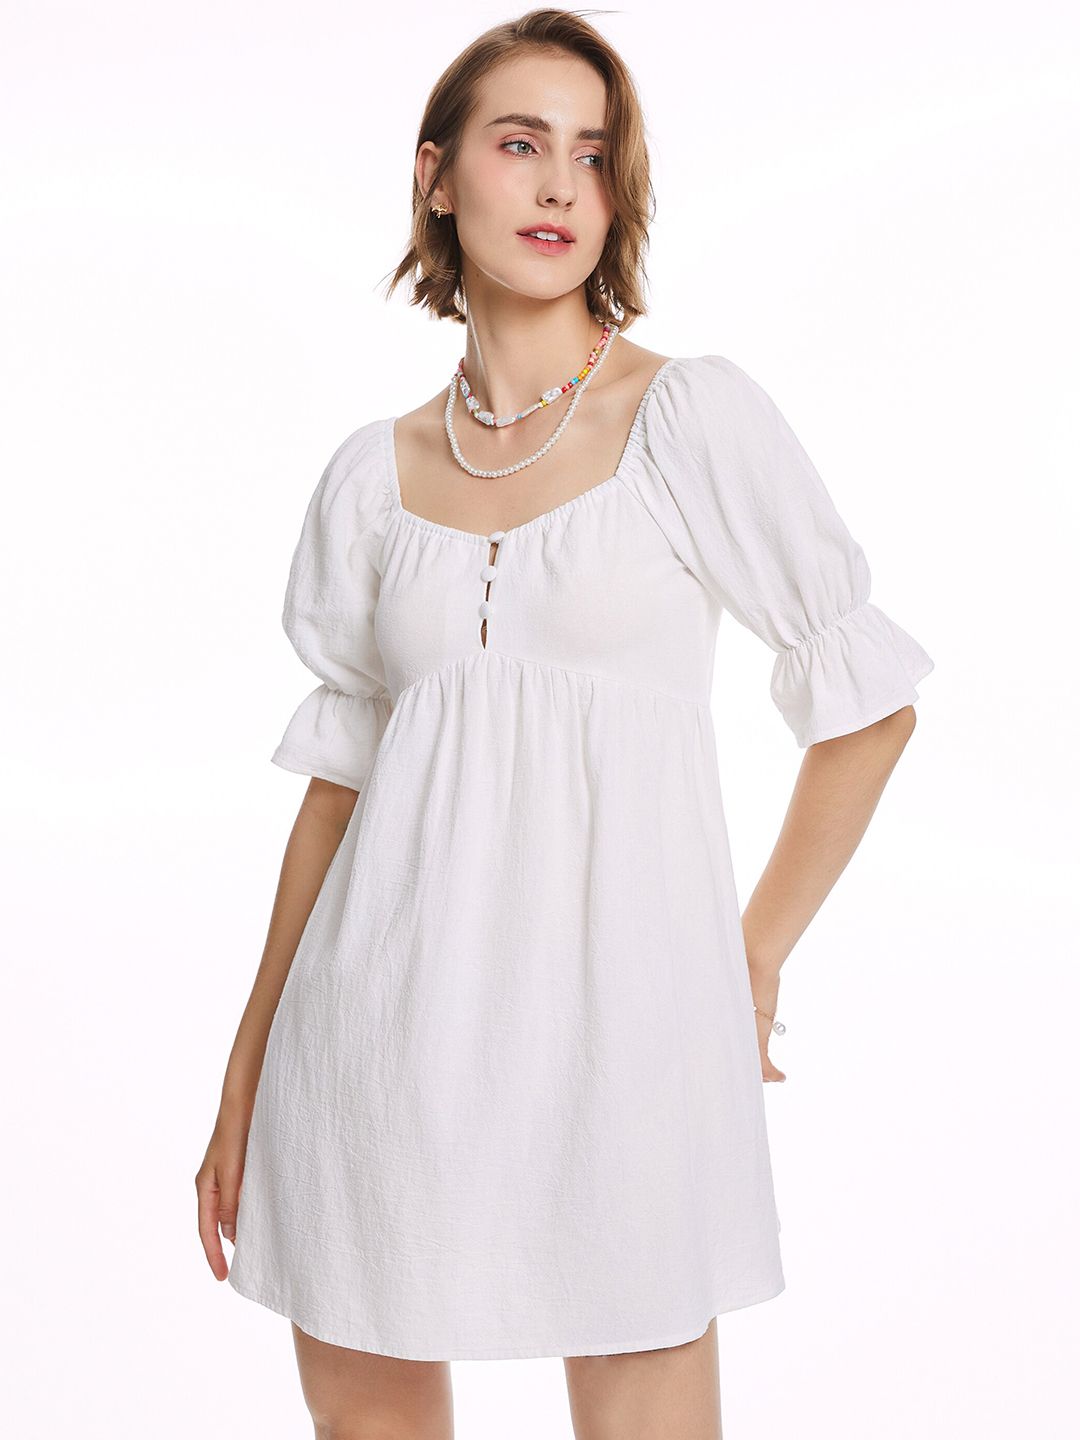 URBANIC White Dress Price in India